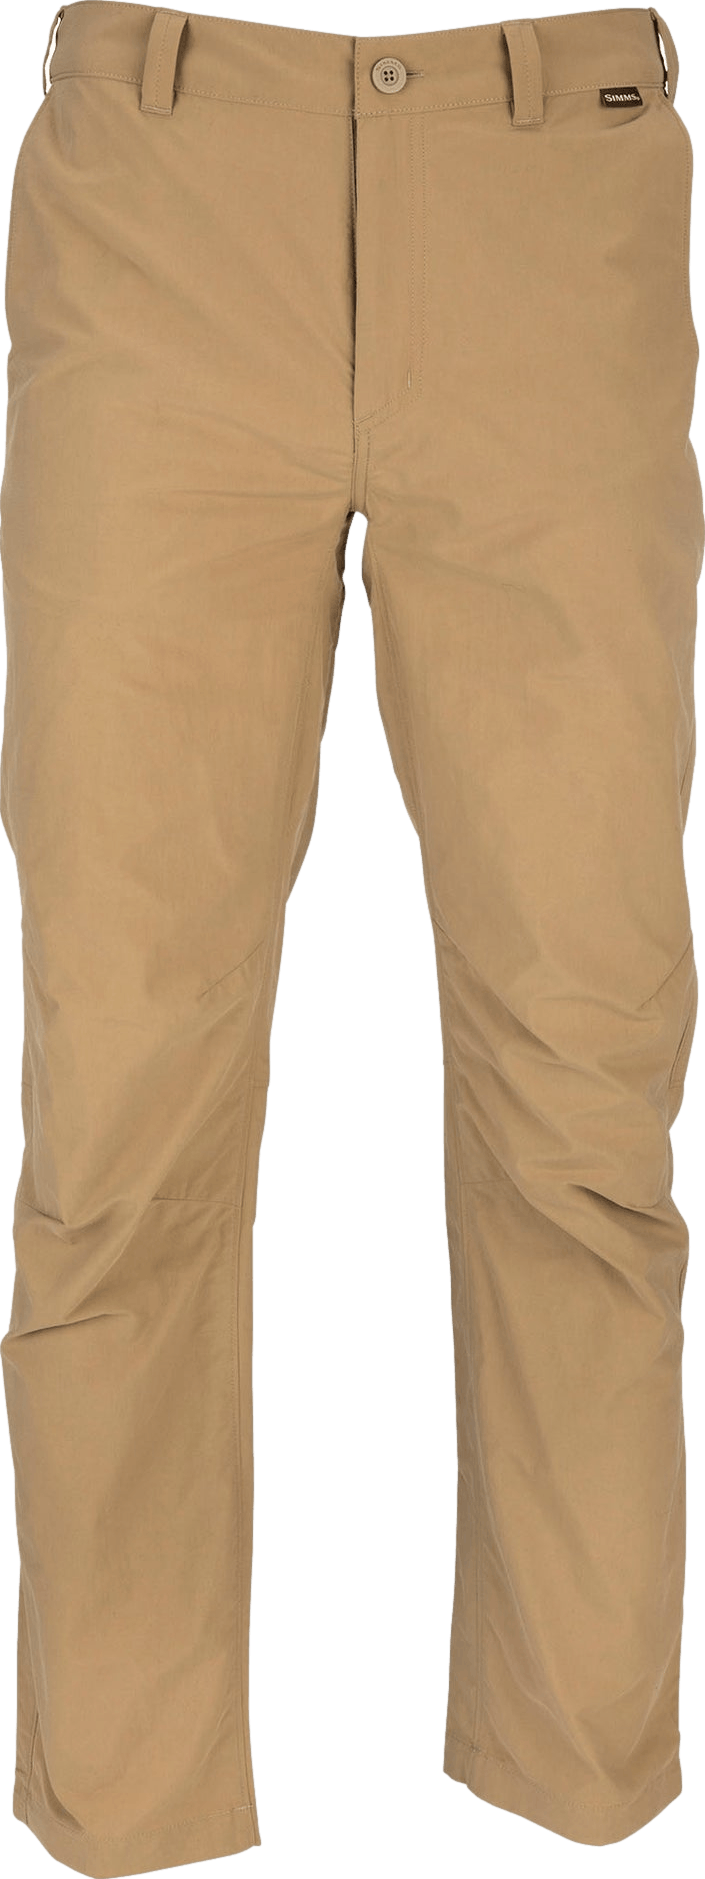 Simms Men's Superlight Pants